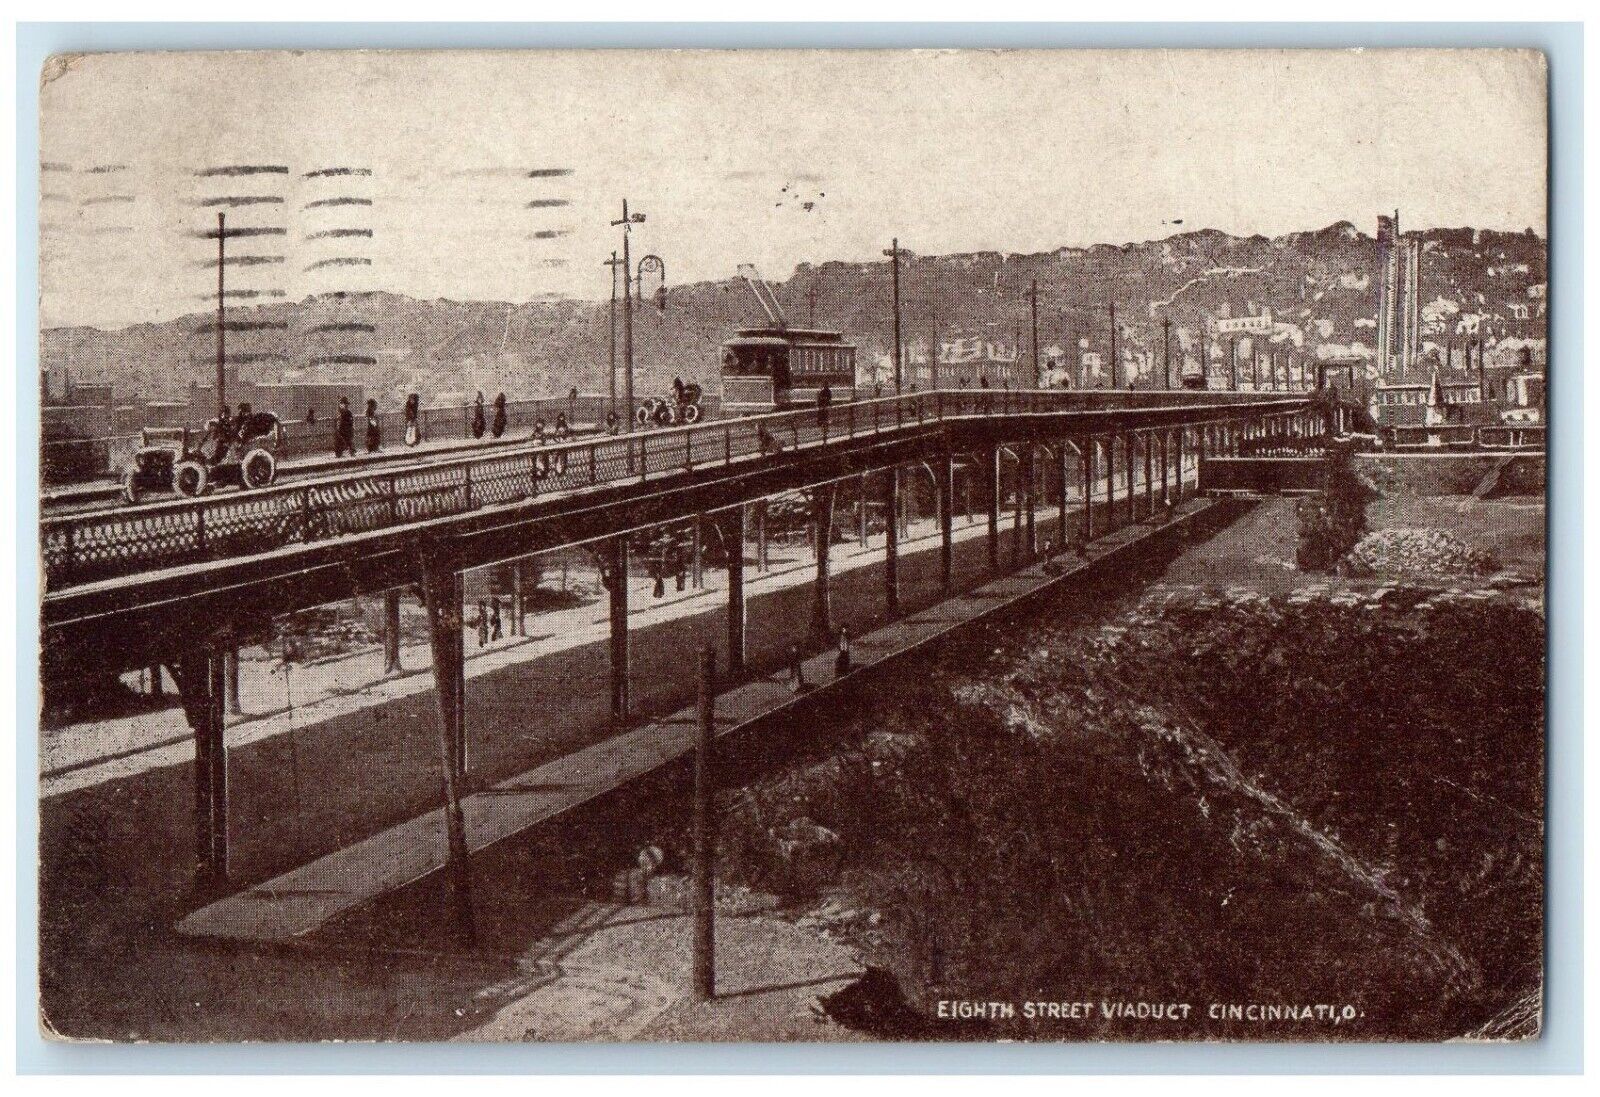 1911 Eighth Street Viaduct Streetcar Railway Bridge Cincinnati Ohio OH Postcard